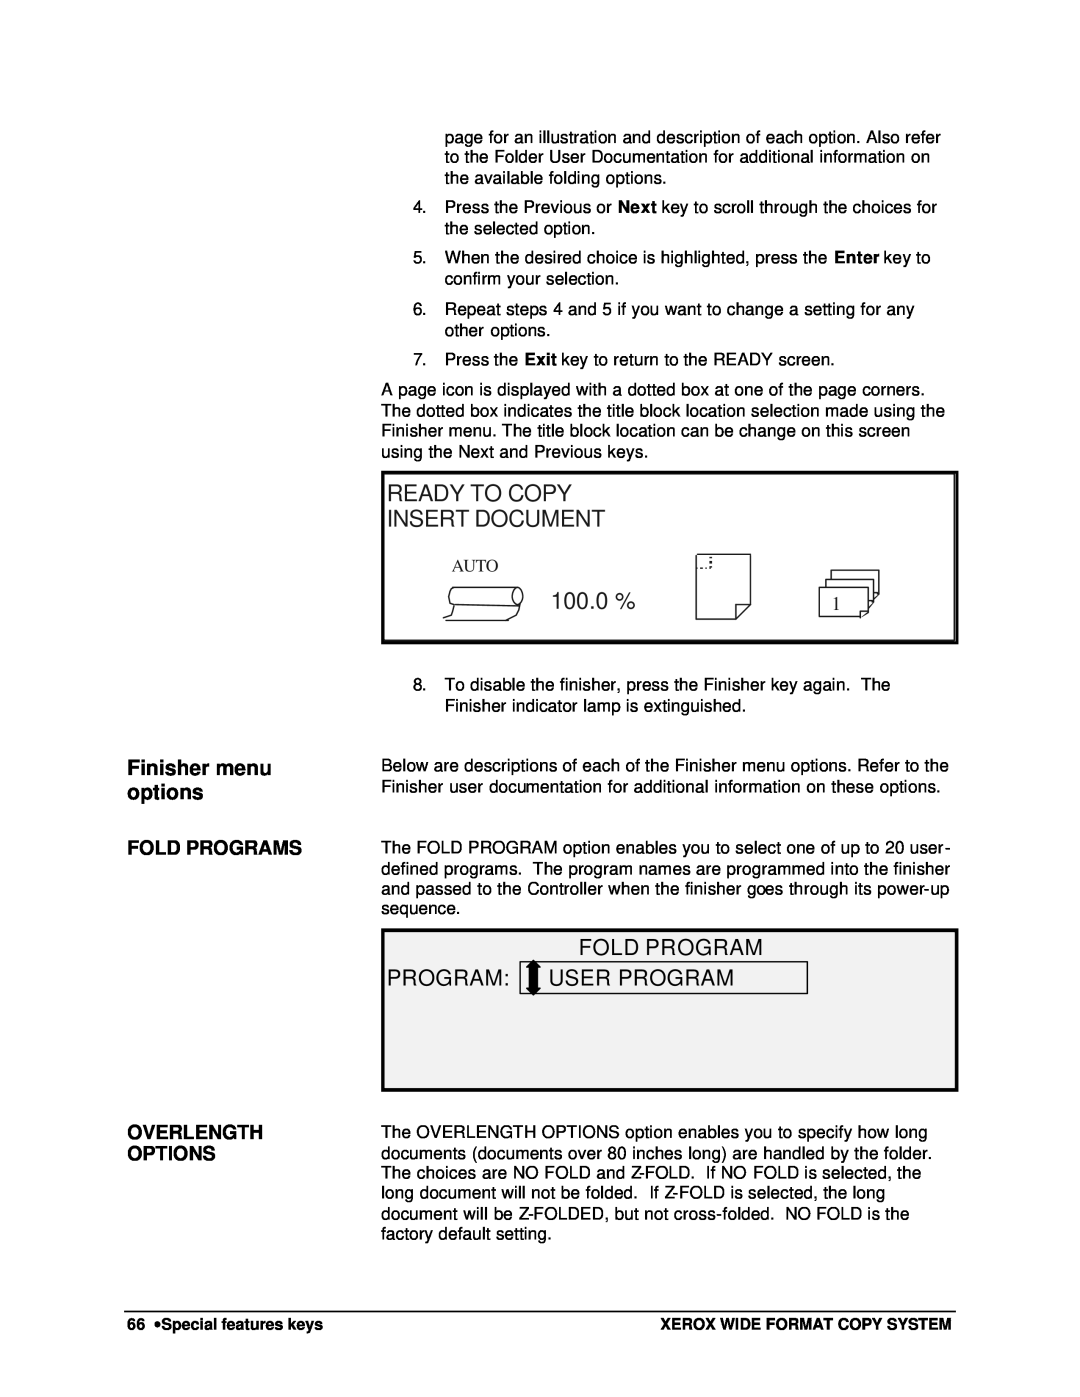 Xerox 8825 Ready To Copy Insert Document, Fold Program Program: User Program, 100.0 %, Fold Programs Overlength Options 